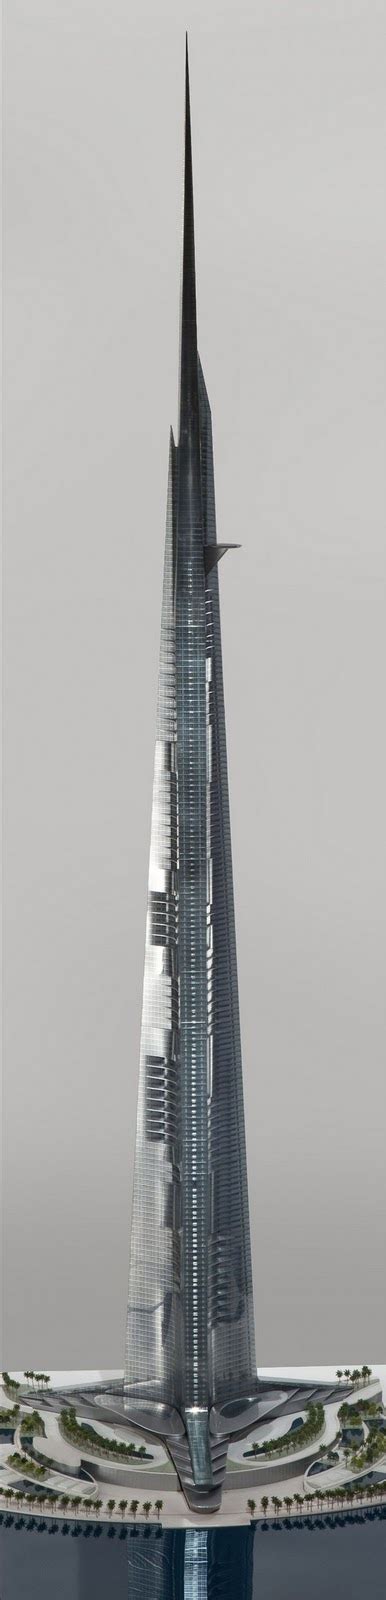 Kingdom Tower Worlds Tallest Skyscraper In Jeddah Trawel India Mails